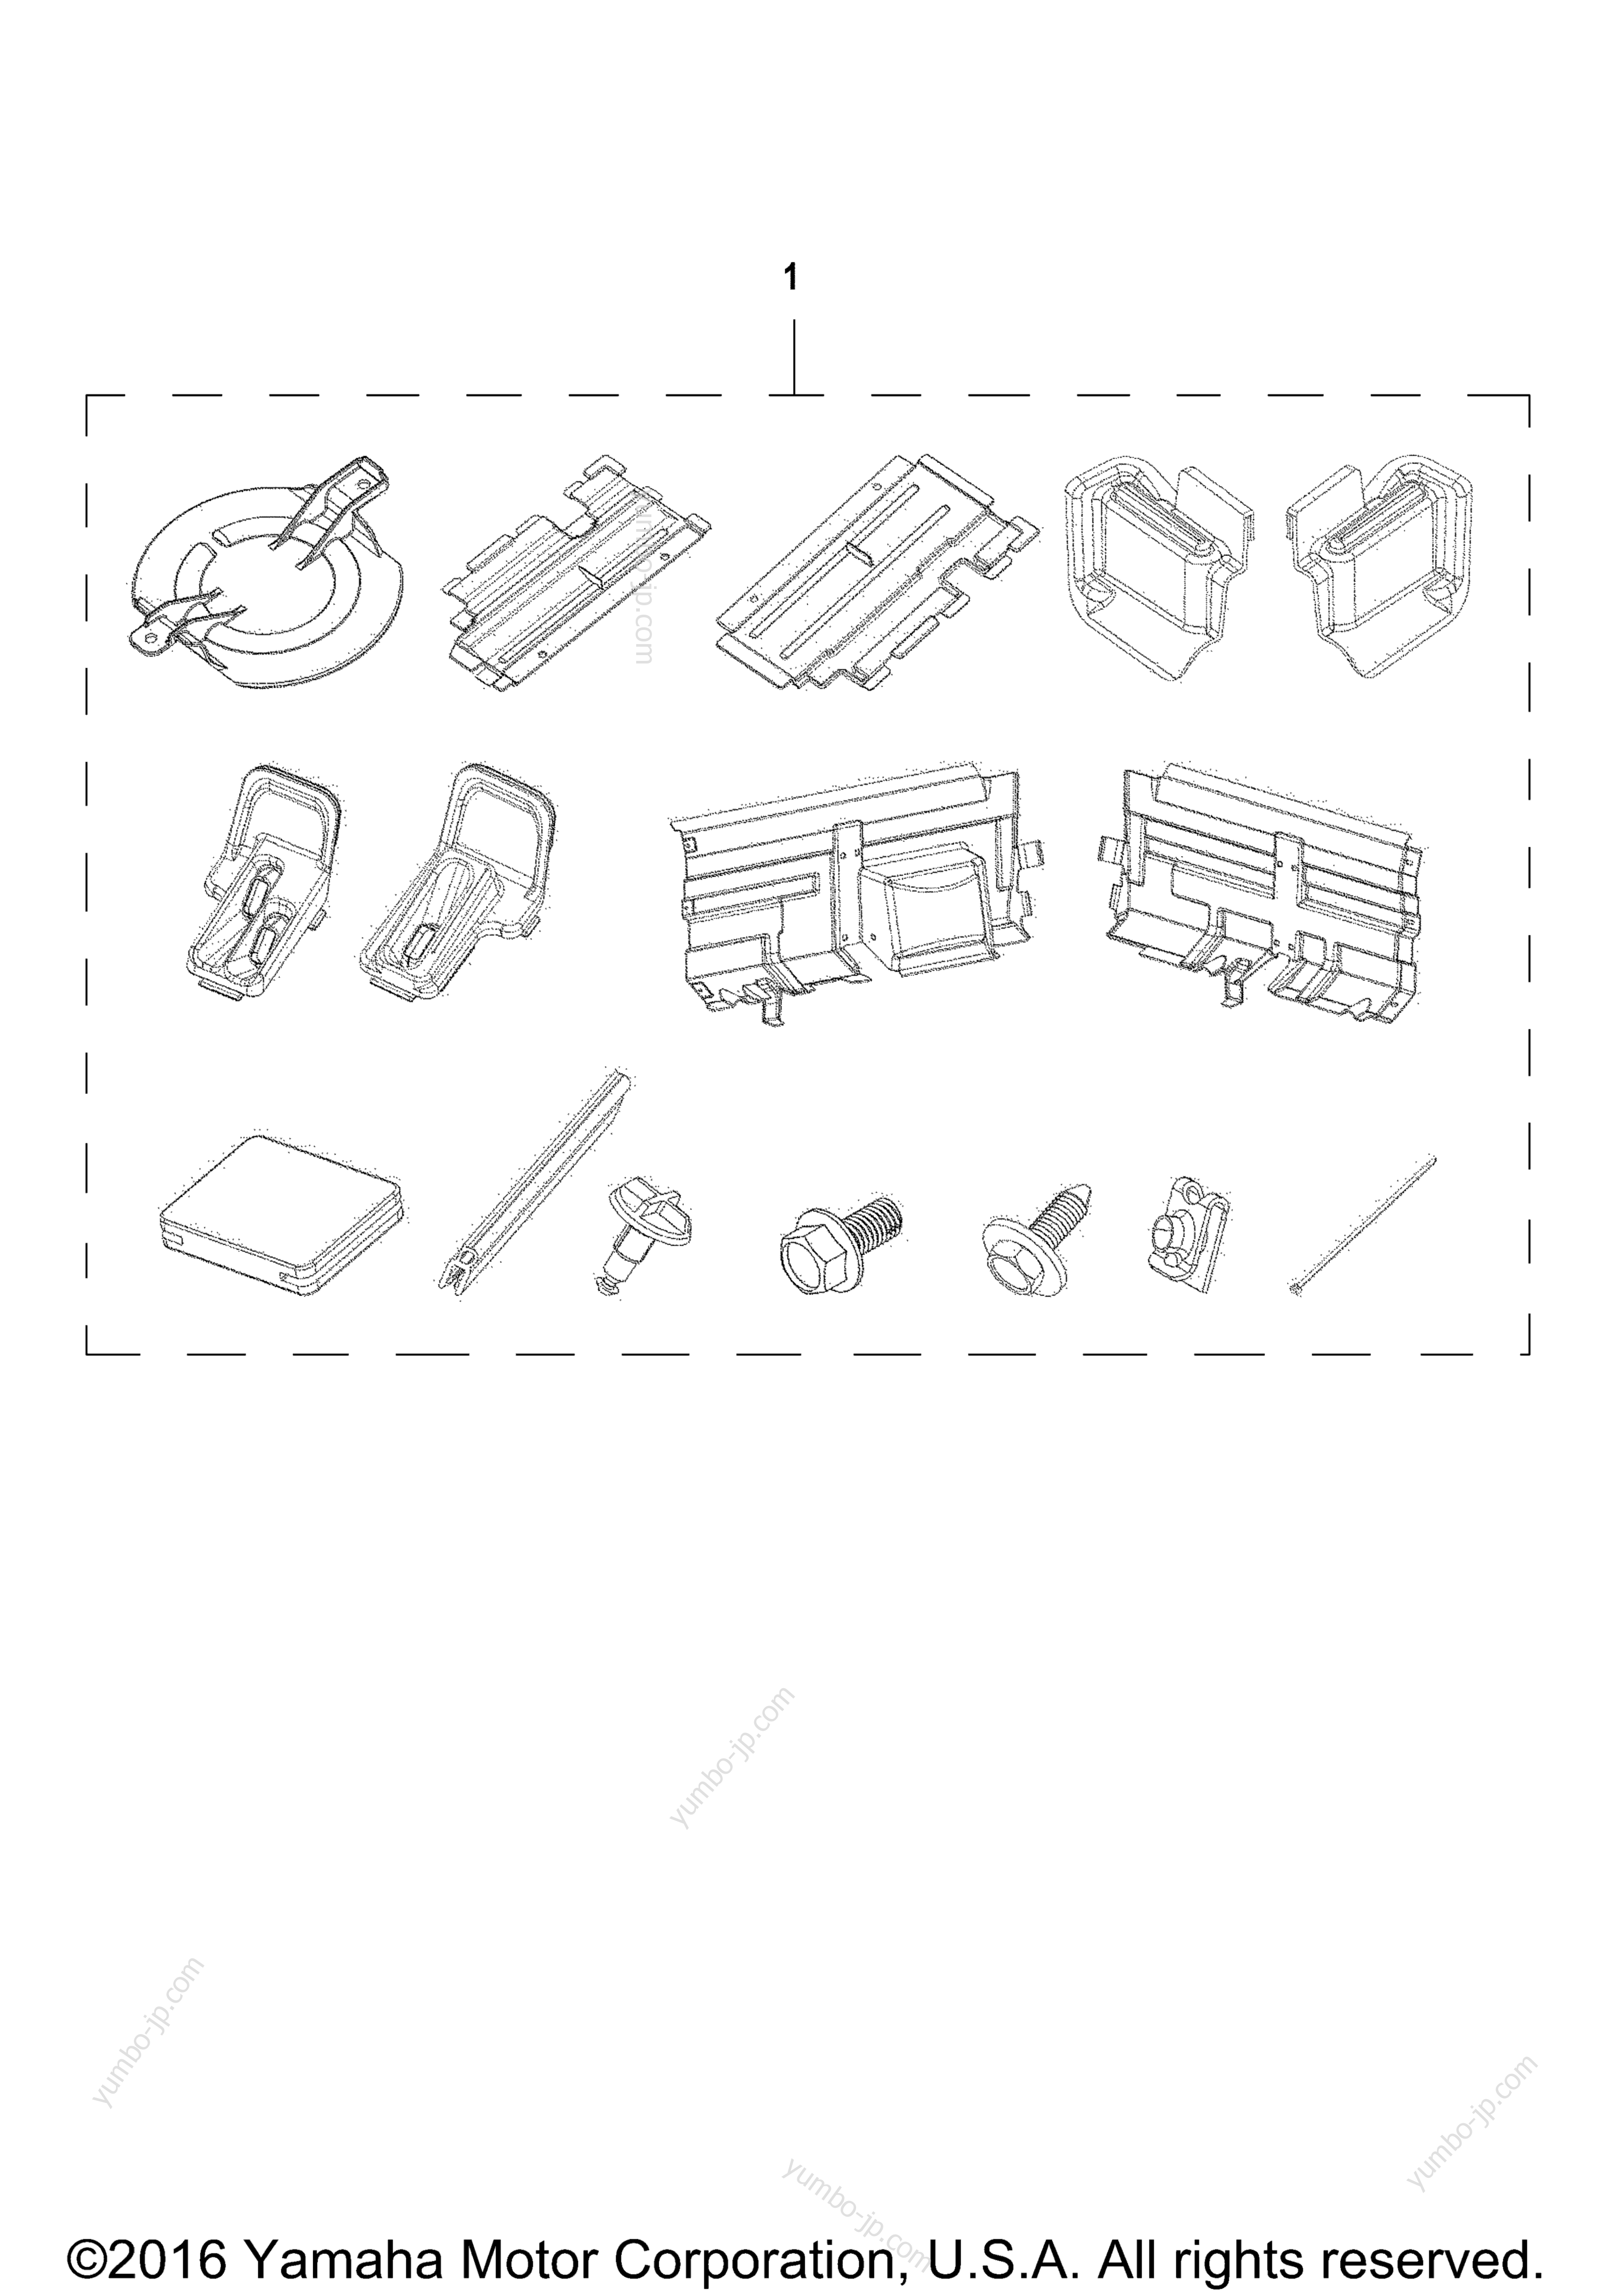 Alternate Parts для мотовездеходов YAMAHA VIKING VI 700 EPS HUNTER (YXC700PHFH) 2015 г.